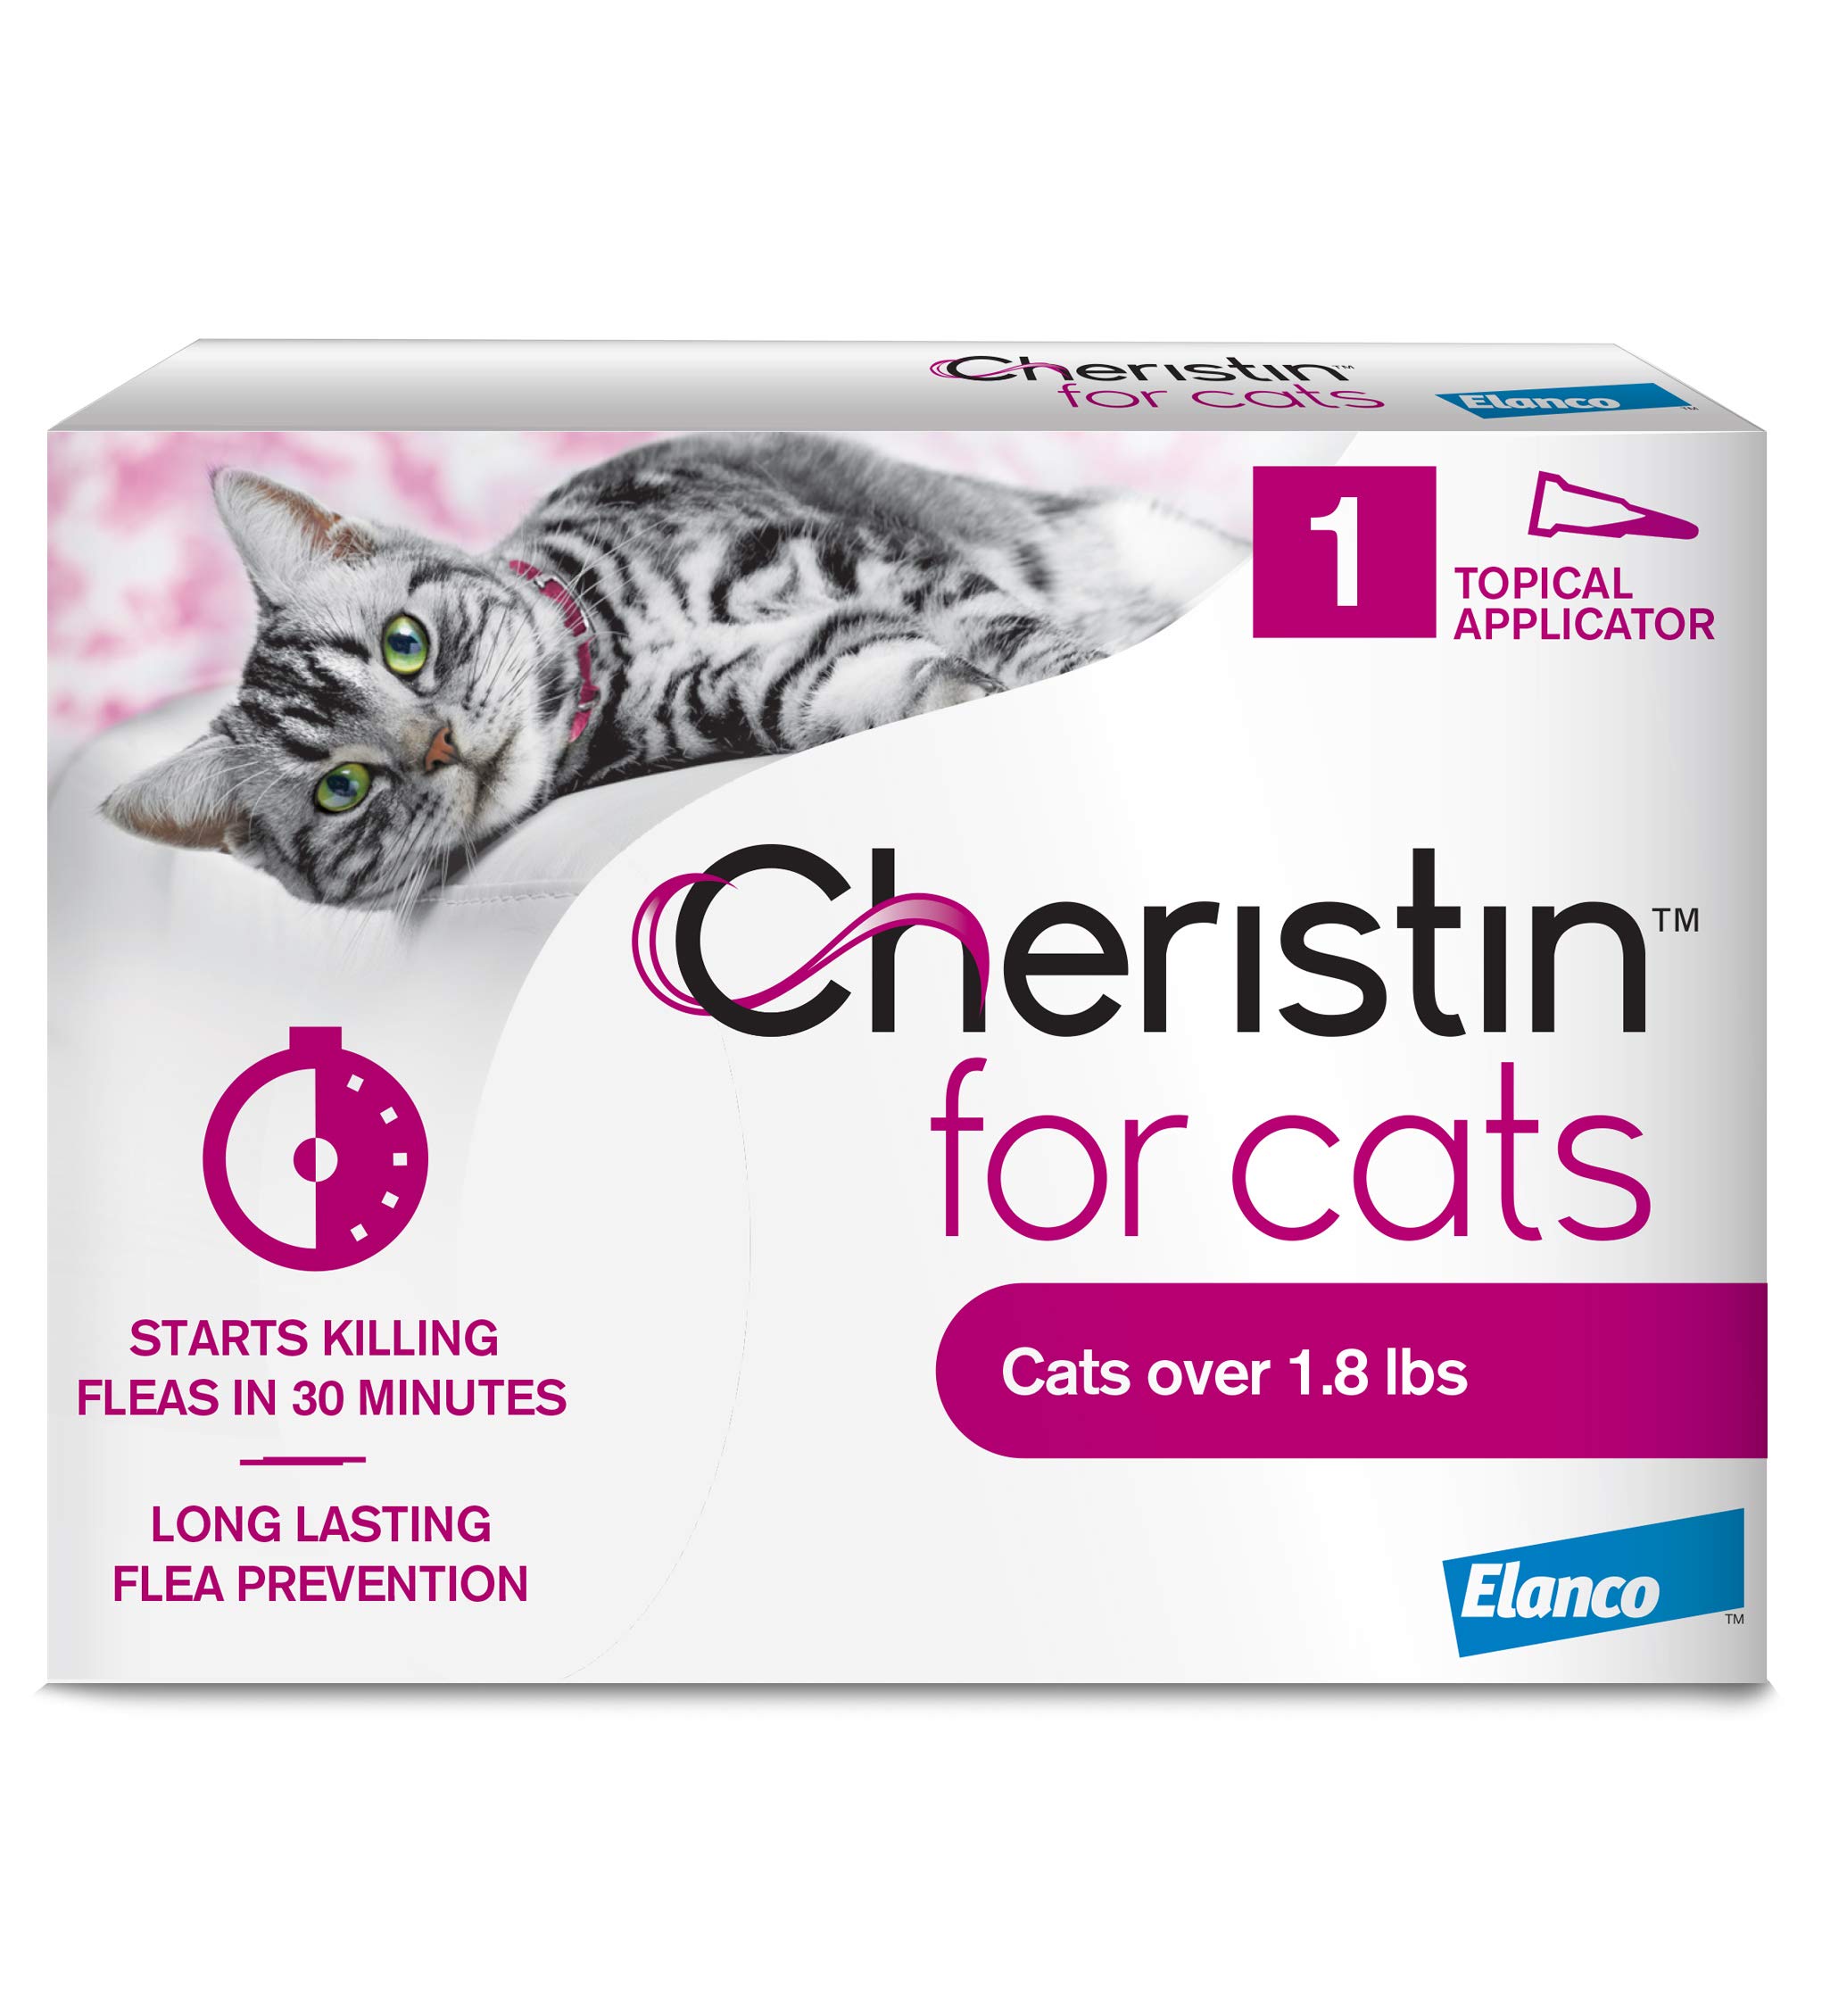 Cheristin 猫用局所ノミ治療薬は6週間効果が持続...